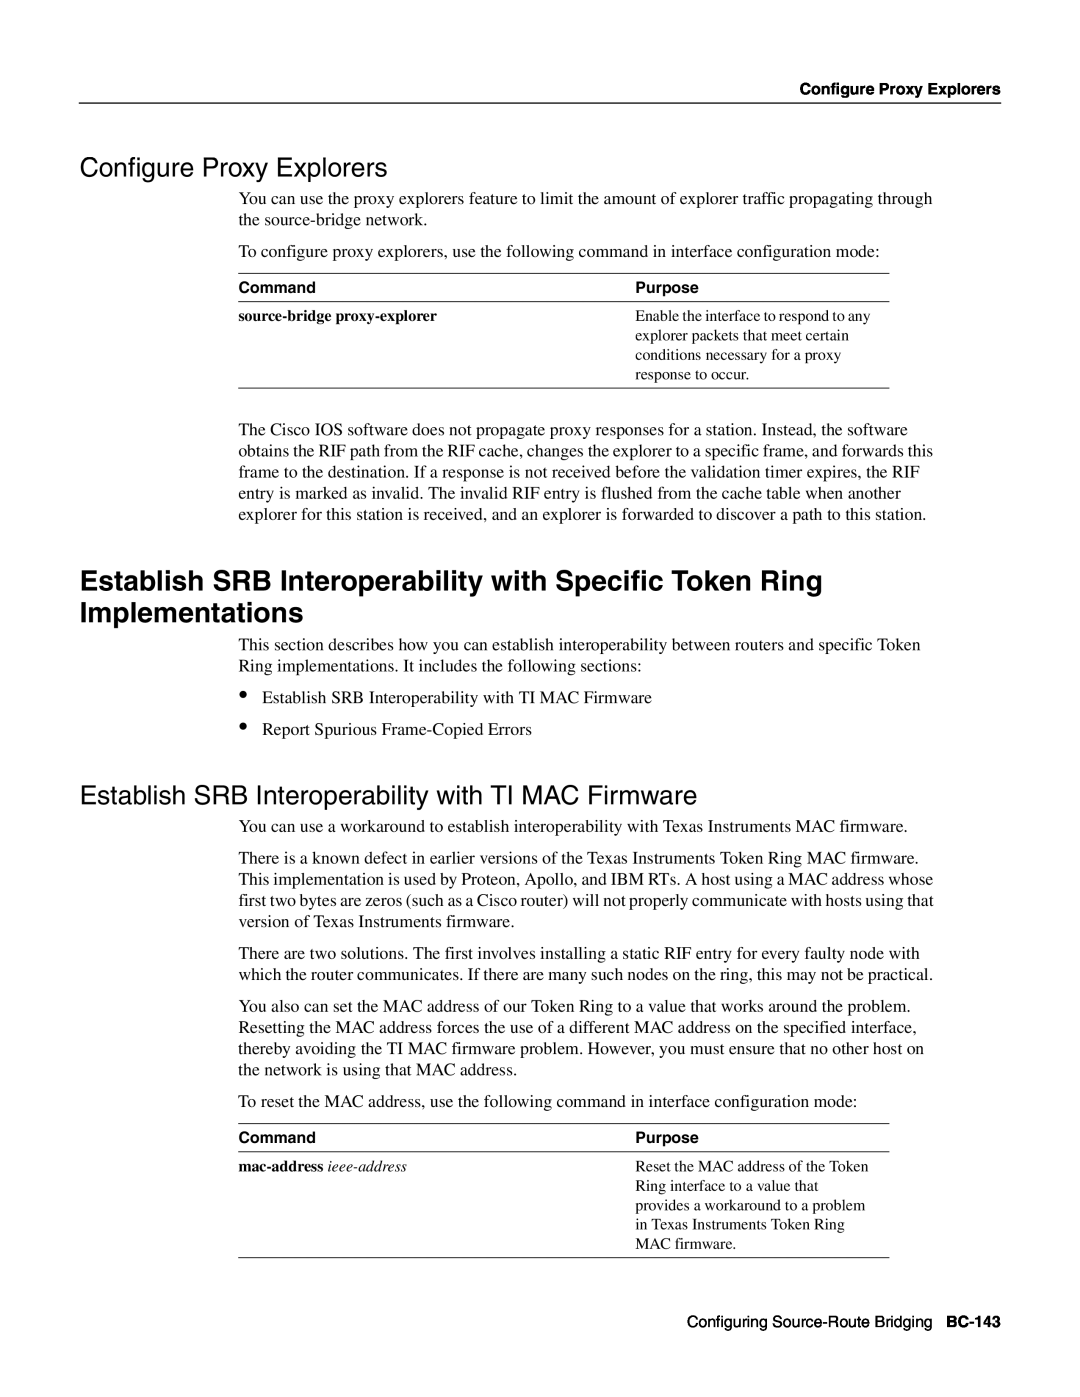 Cisco Systems BC-109 manual Configure Proxy Explorers, Establish SRB Interoperability with TI MAC Firmware 